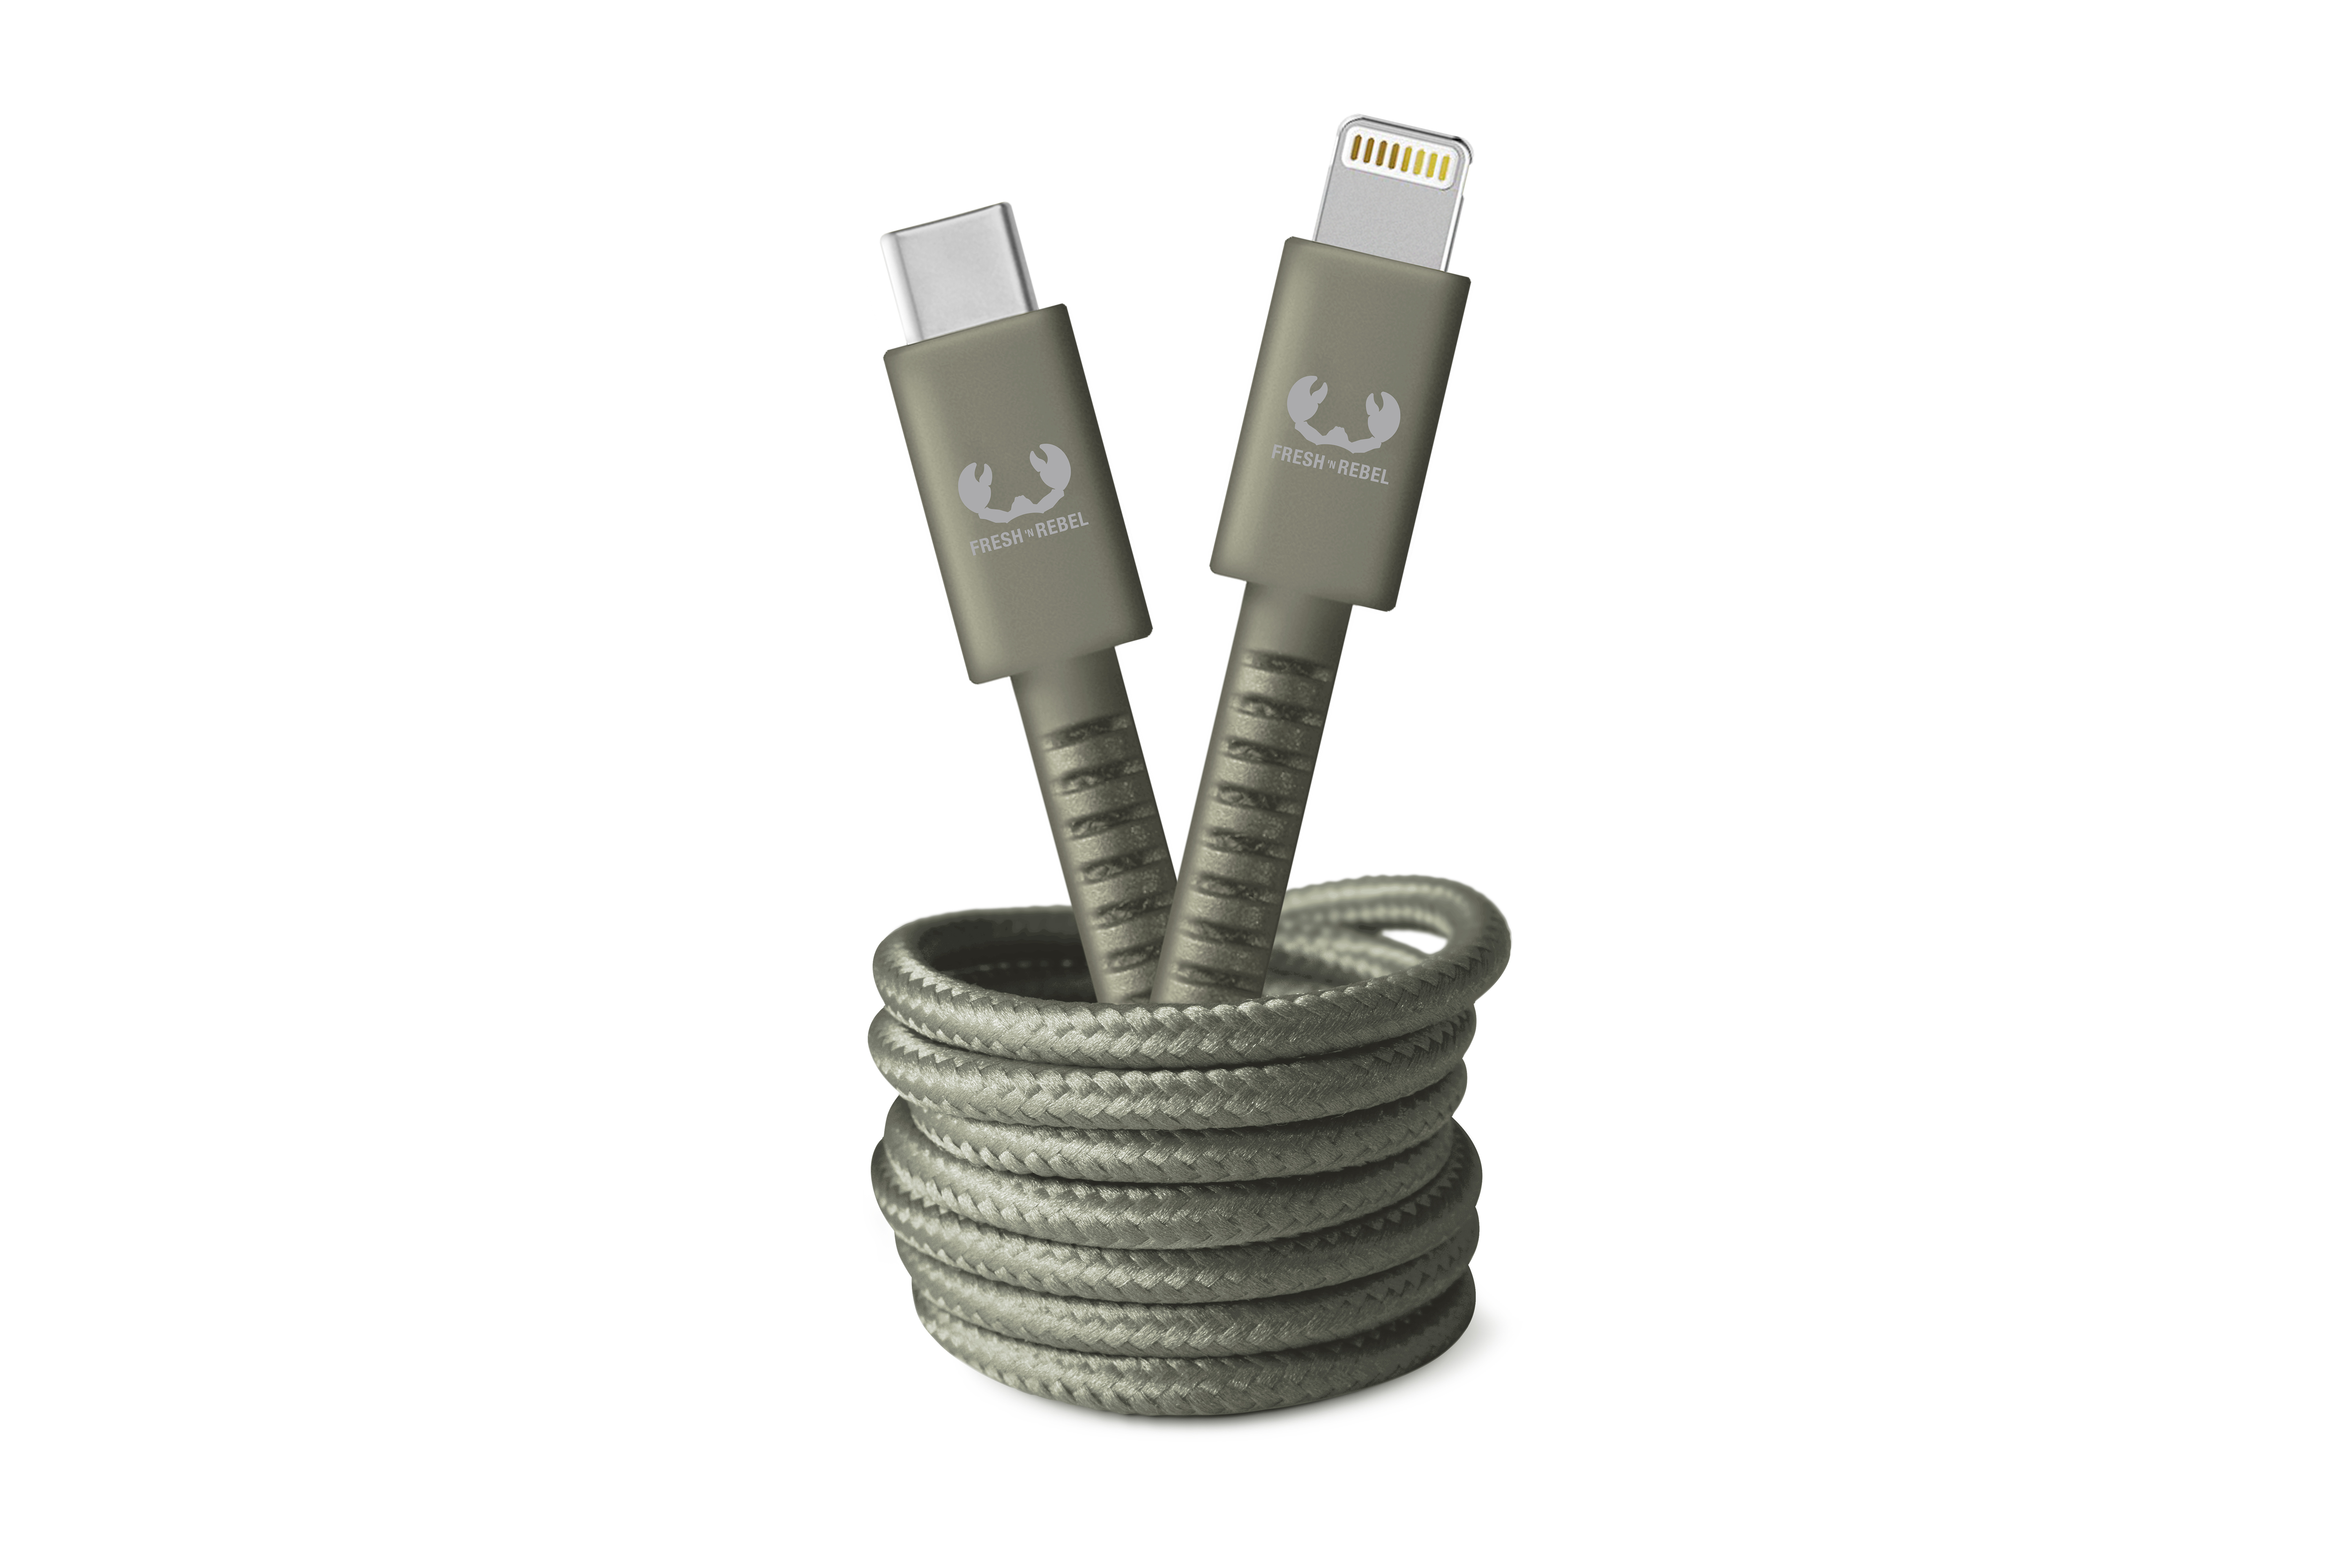 cable FRESH - - Ladekabel, Apple REBEL USB-C \'N 2.0m, Dried 2 Fabriq m, Green Lightning